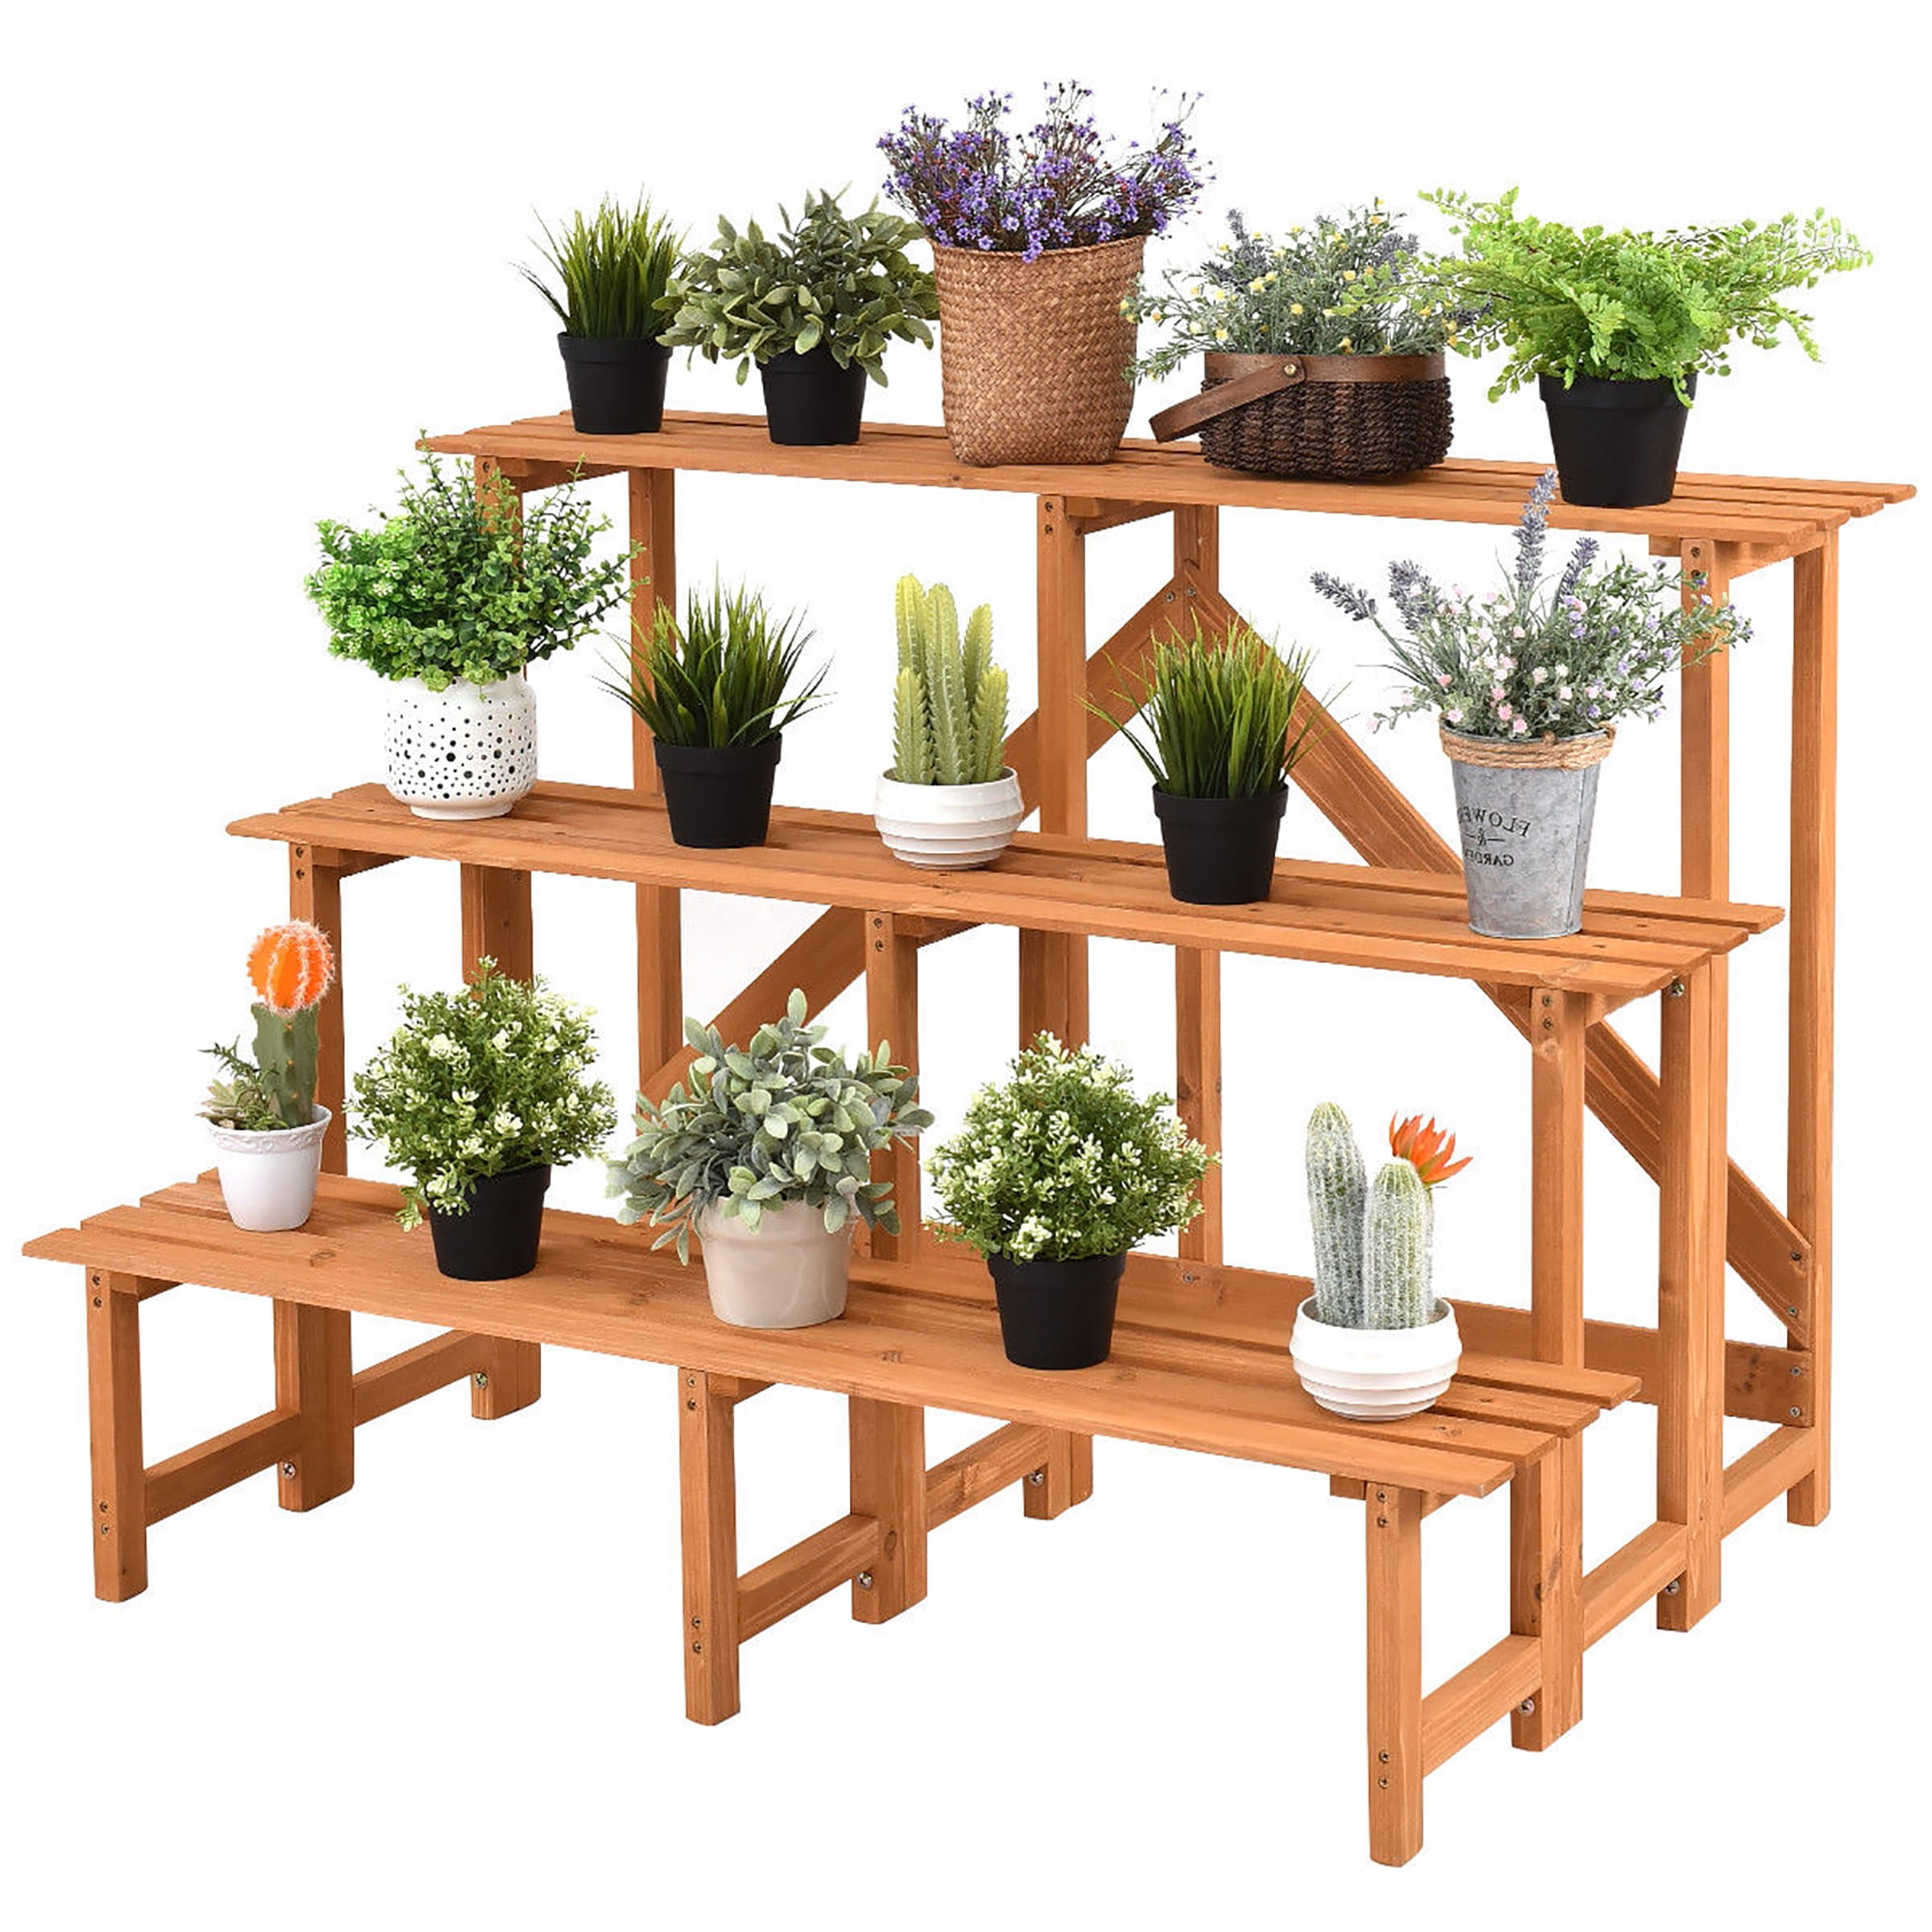 3 Tier Flower Plant Pot Wooden Shelf Stand Display Garden Step Style Ladder Rack